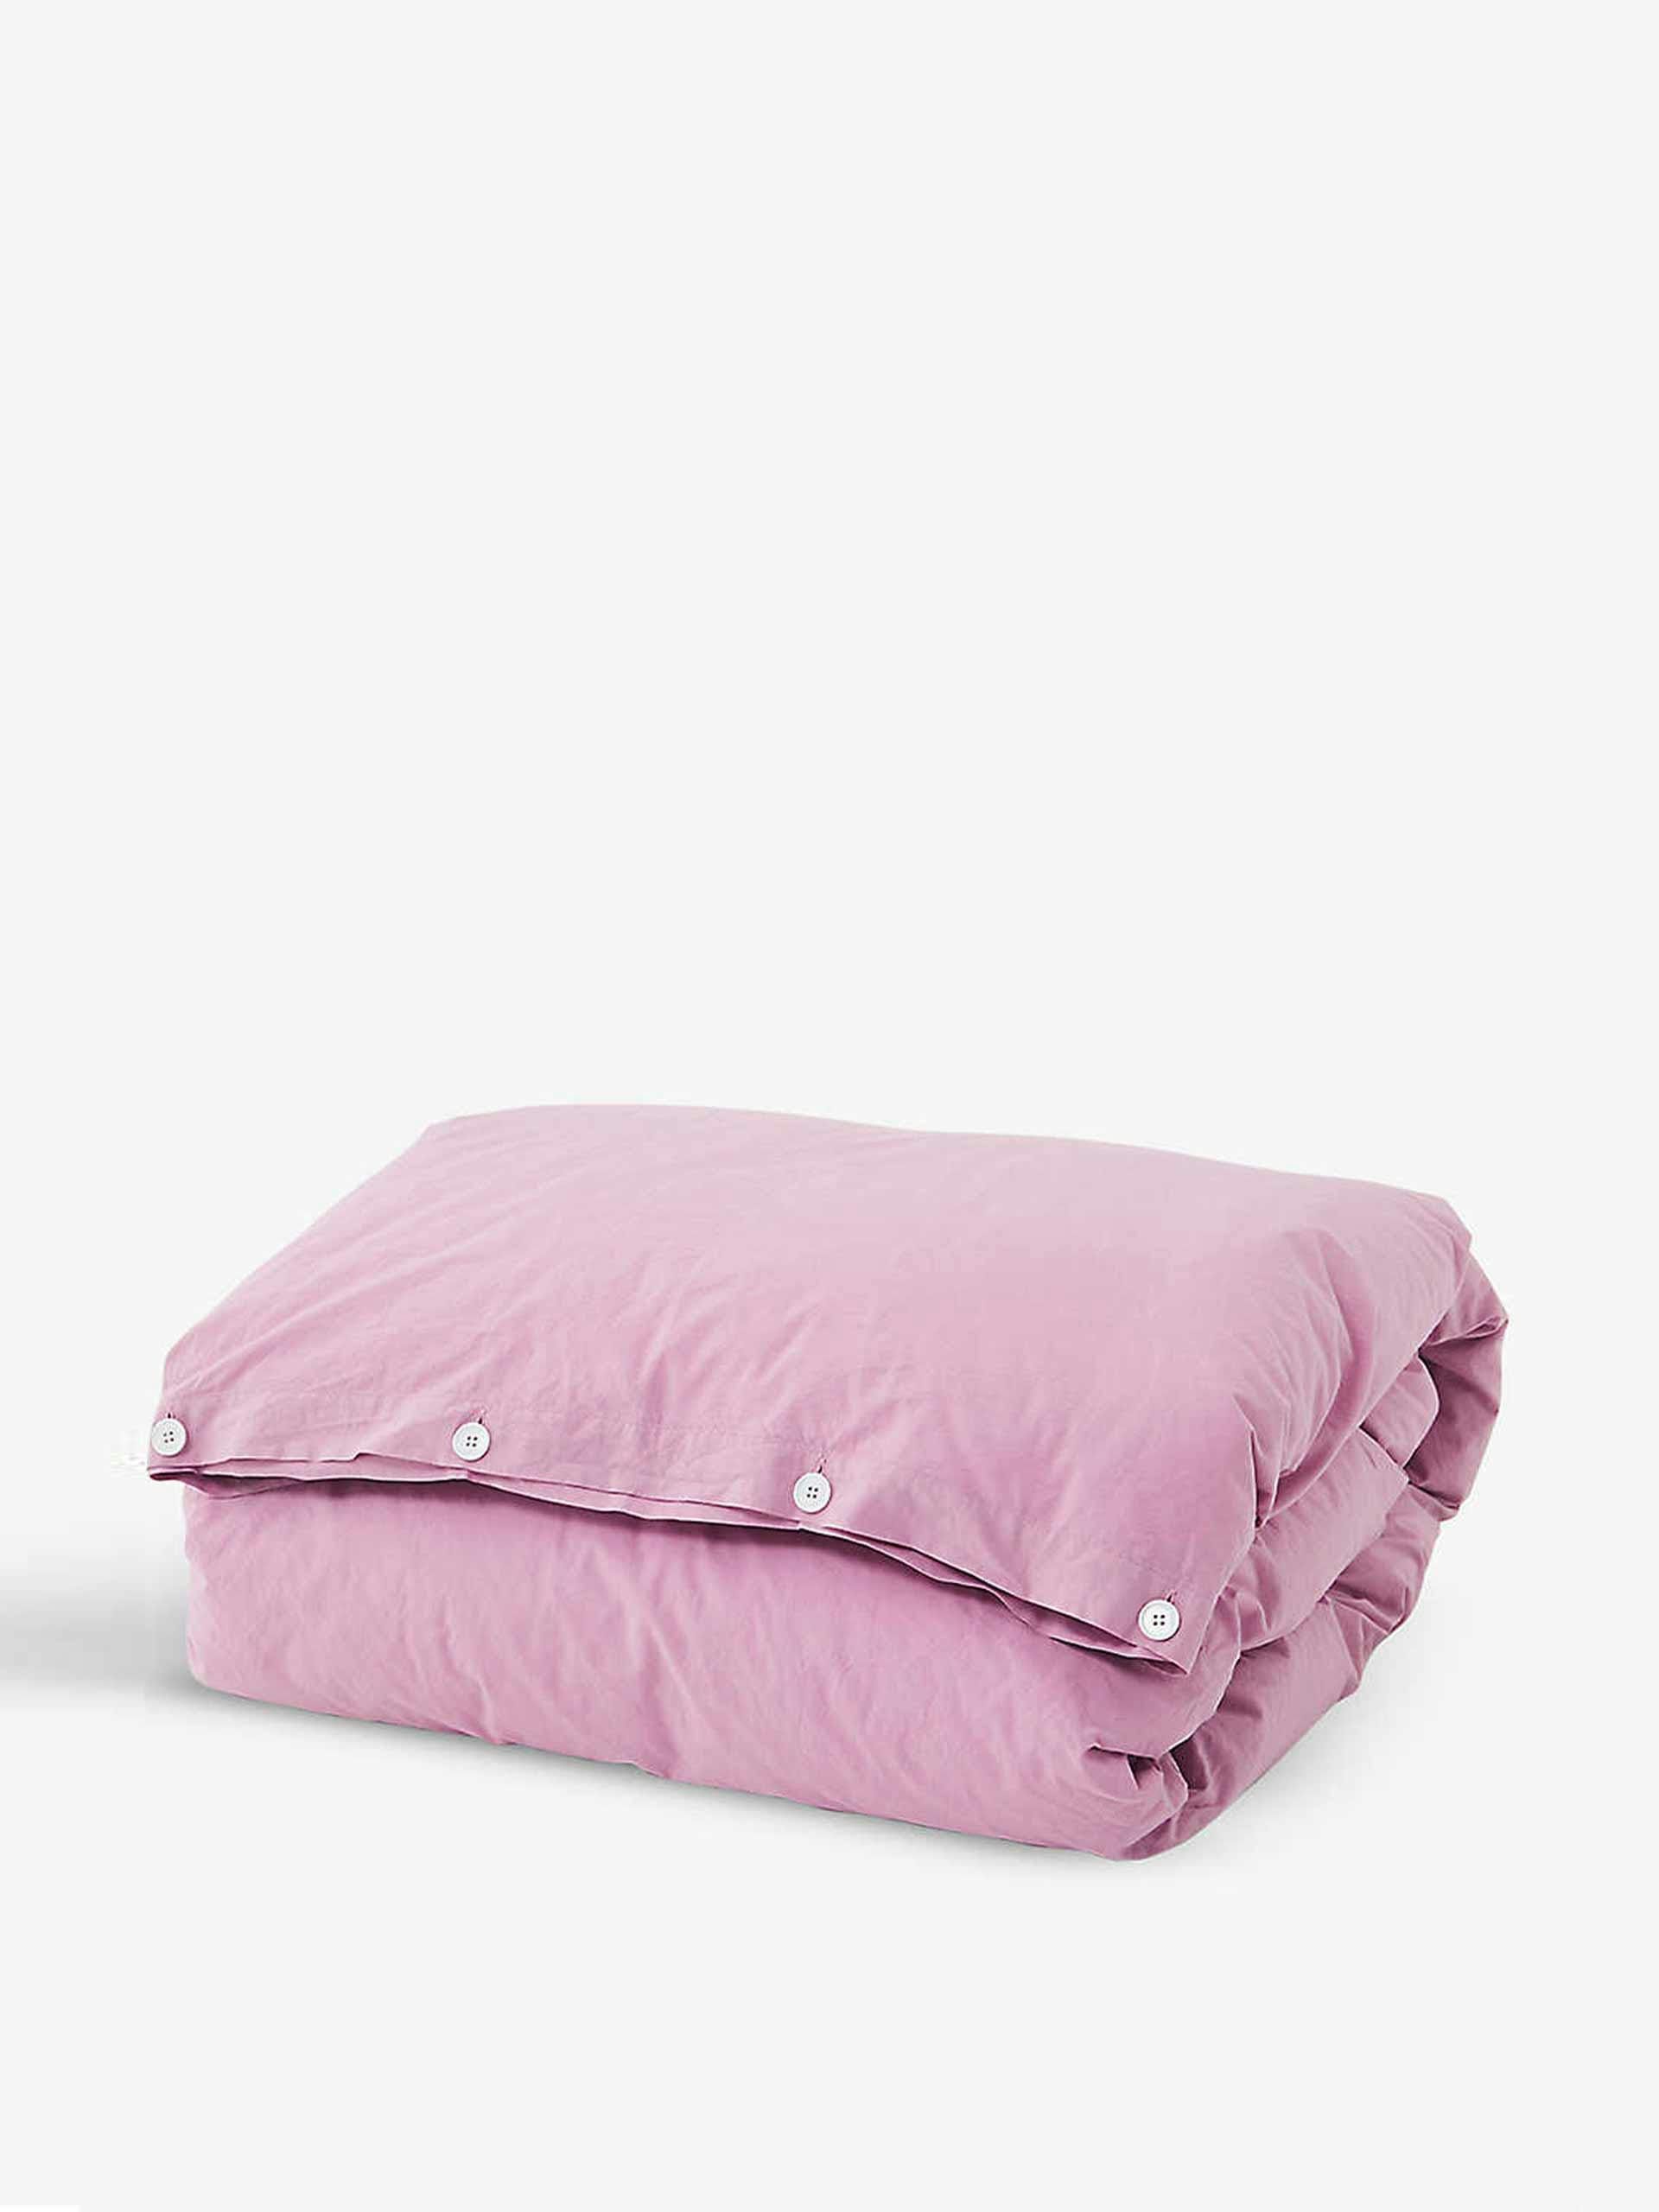 Pink organic cotton duvet cover